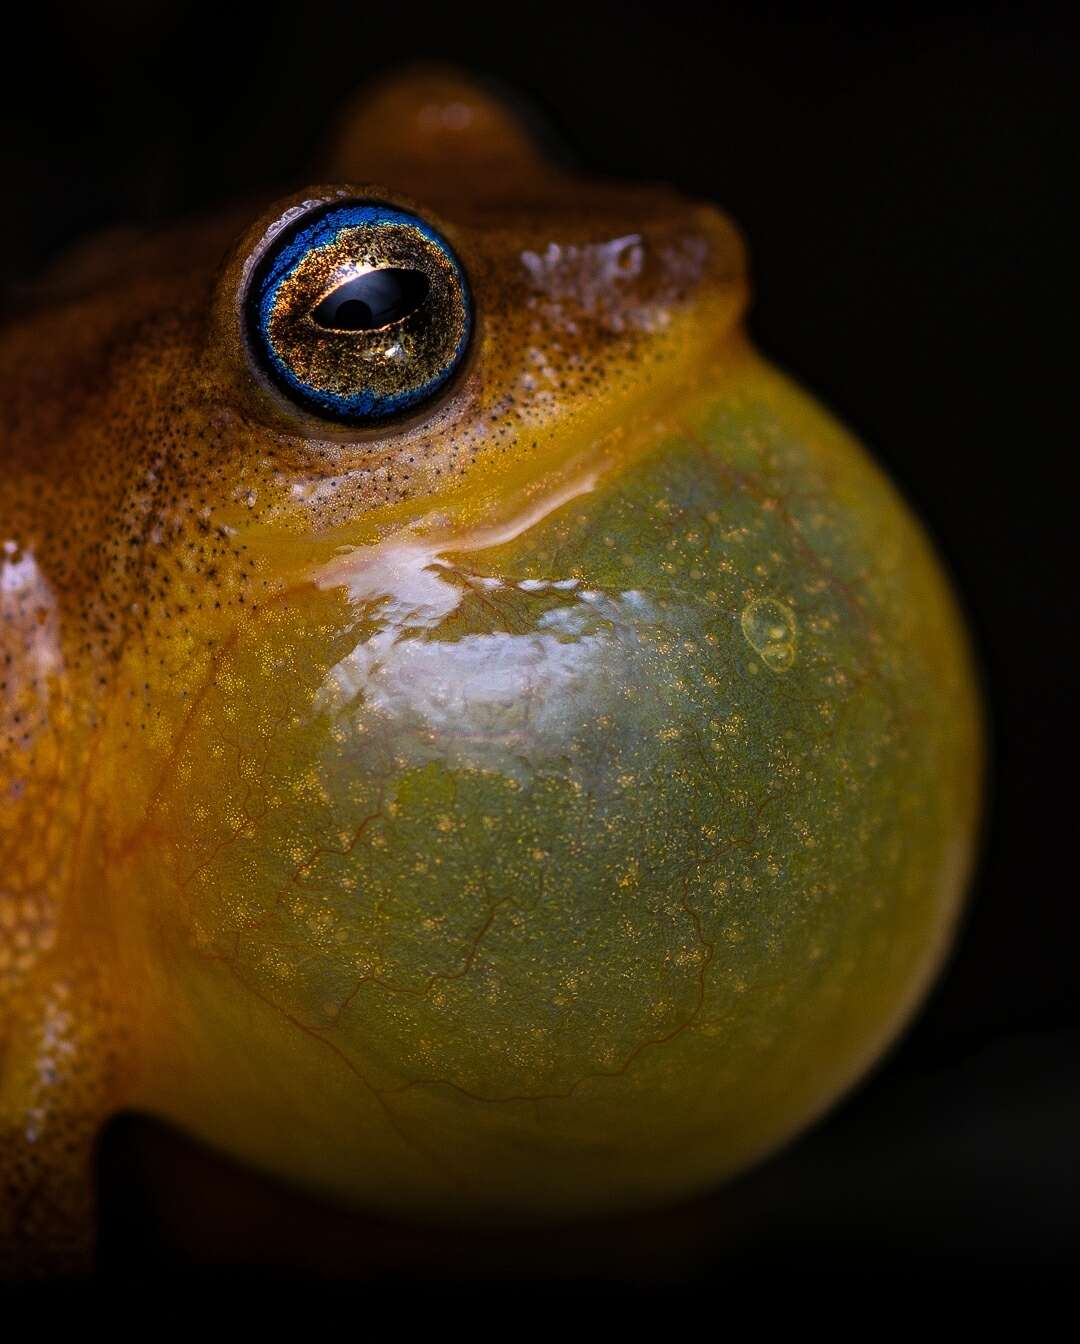 Image of Coorg Yellow Bush Frog